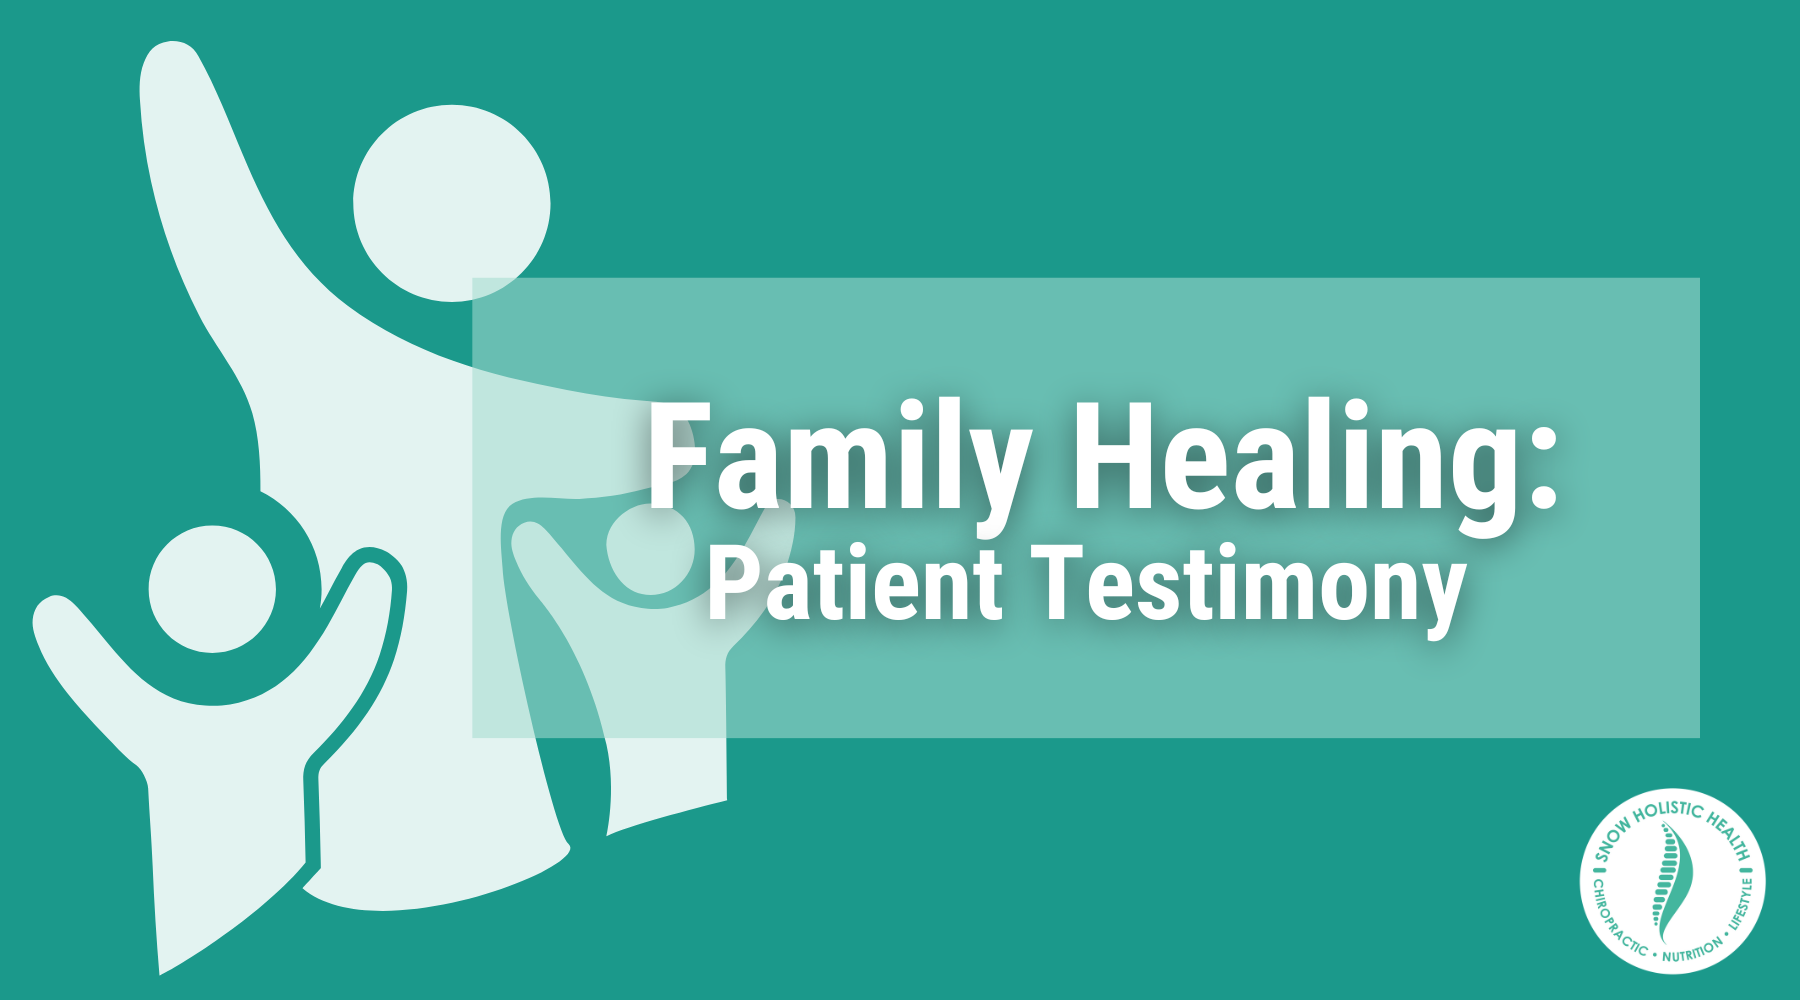 Family healing: patient testimony